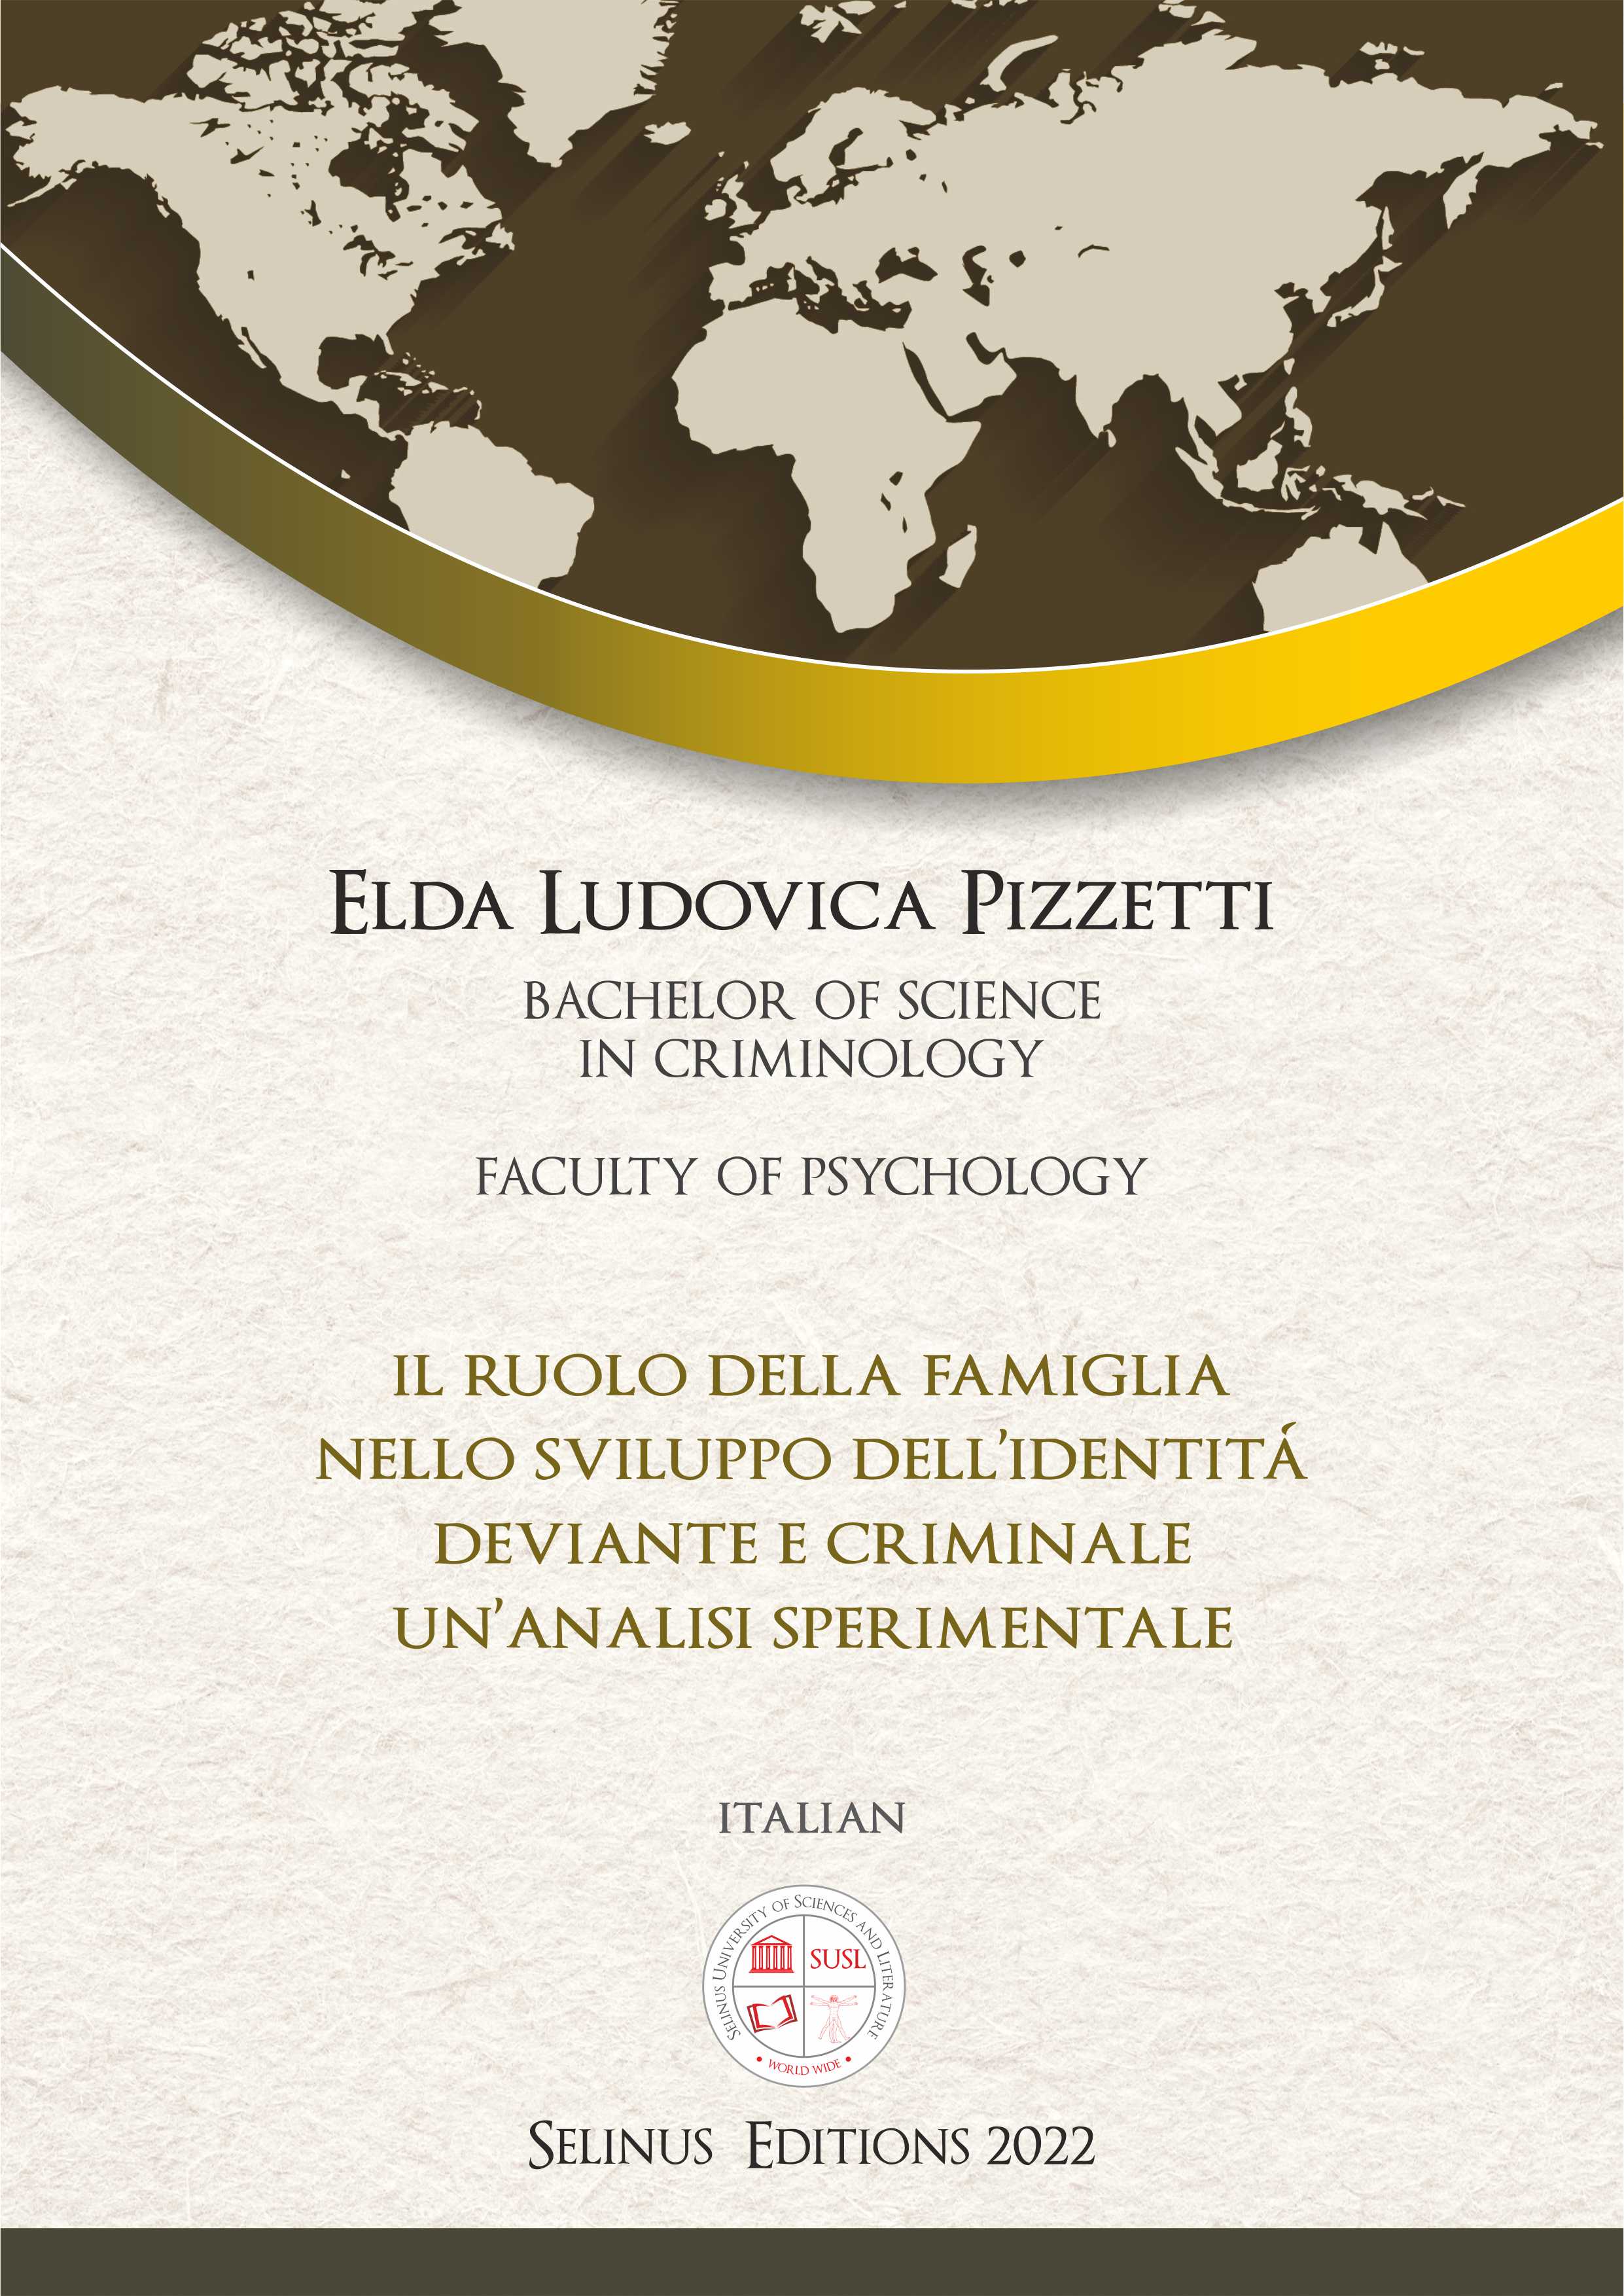 Thesis Elda Ludovica Pizzetti